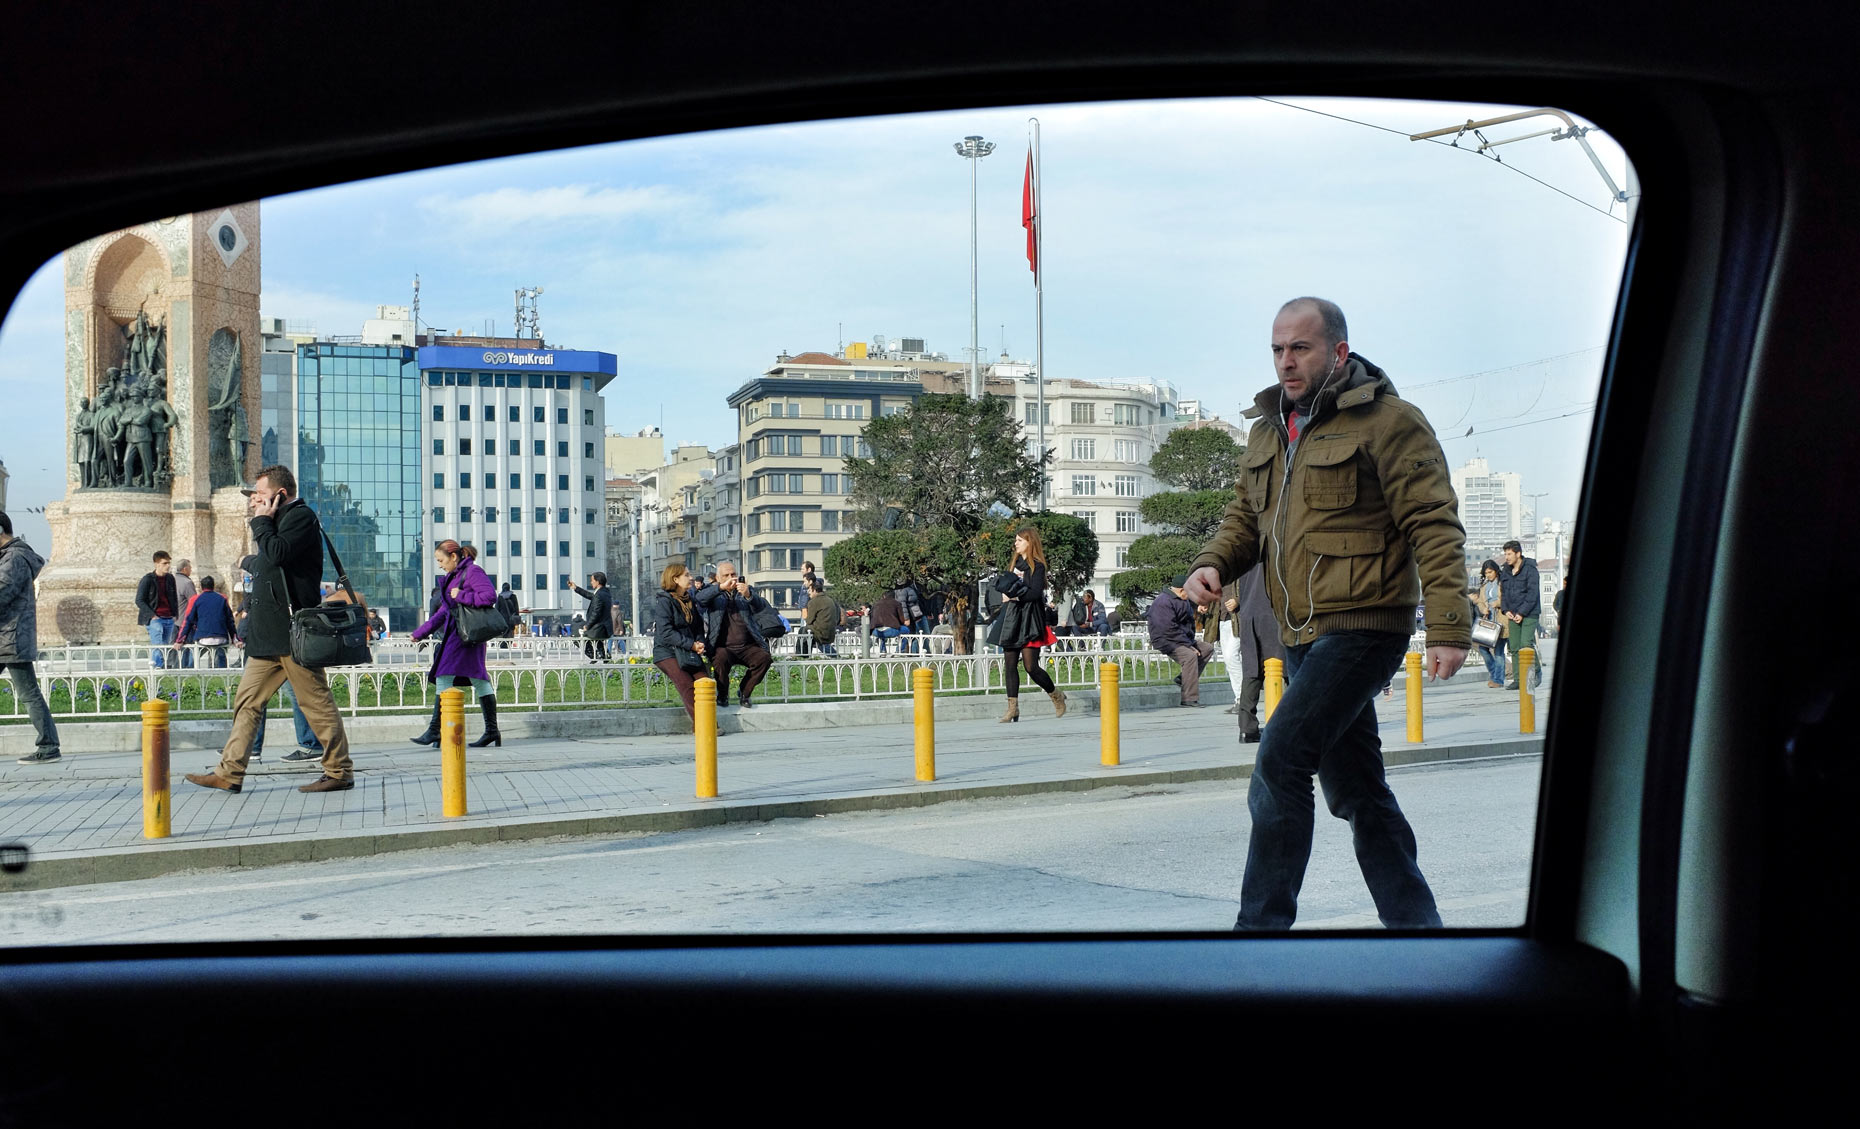 IMG_0717 - street portrait photography by Shane Nagle:  Taksim Sq Istanbul